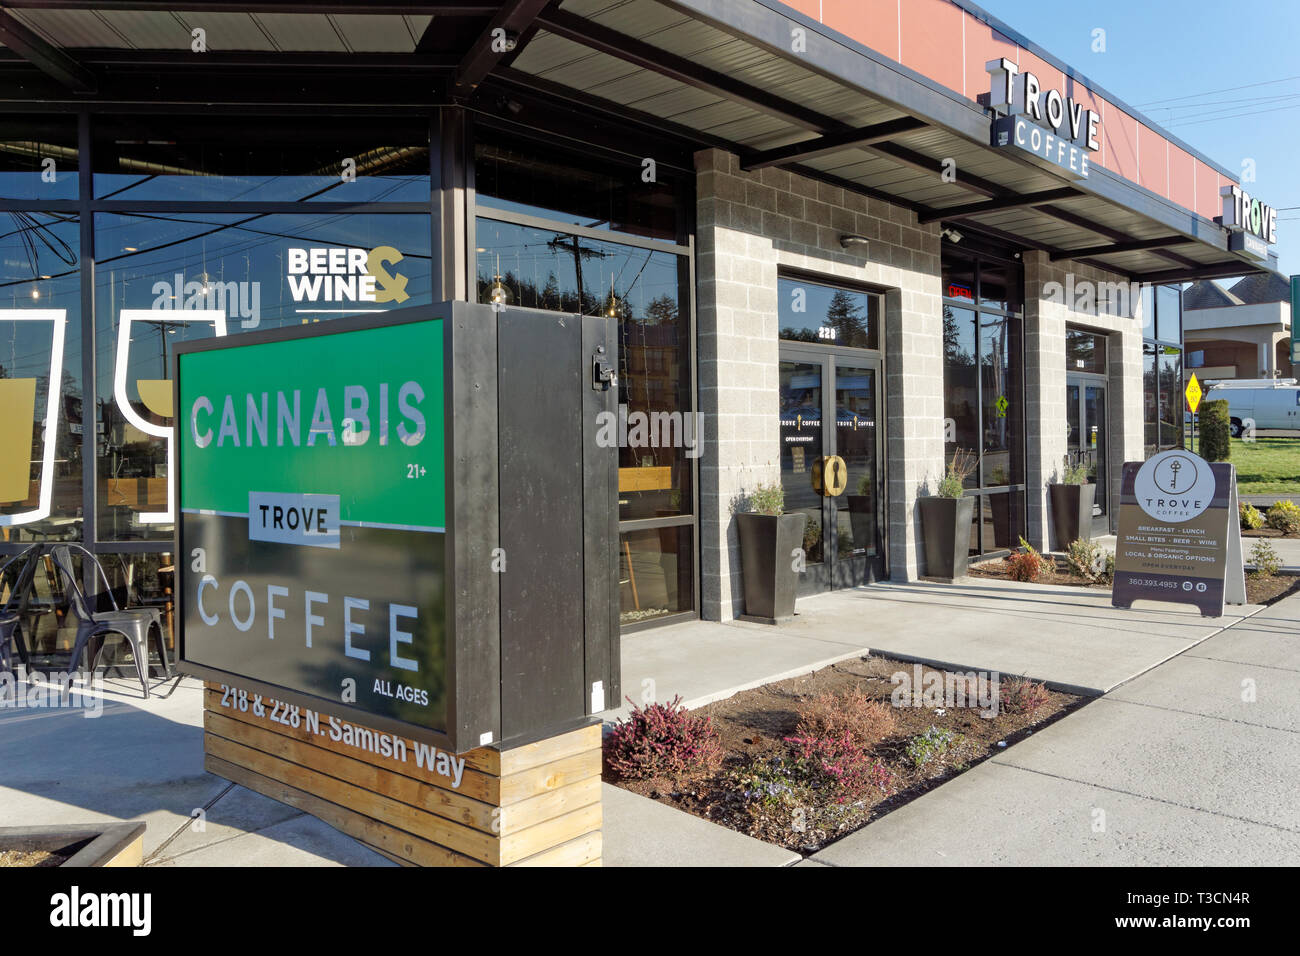 Trove Cannabis recreational and medical marijuana shop on Samish Way, Bellingham, Washington state, USA Stock Photo